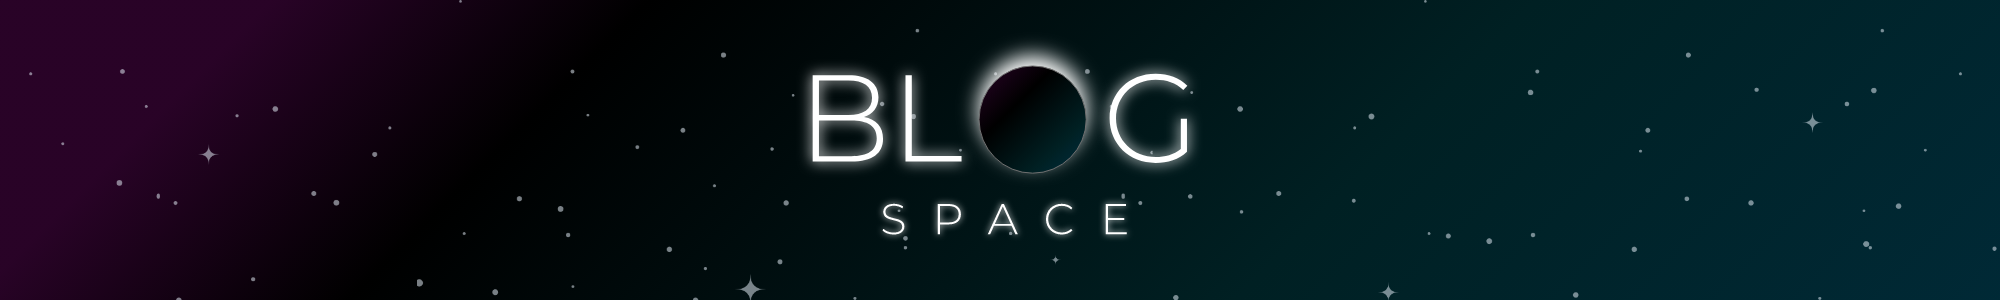 Blog Space BG_wide